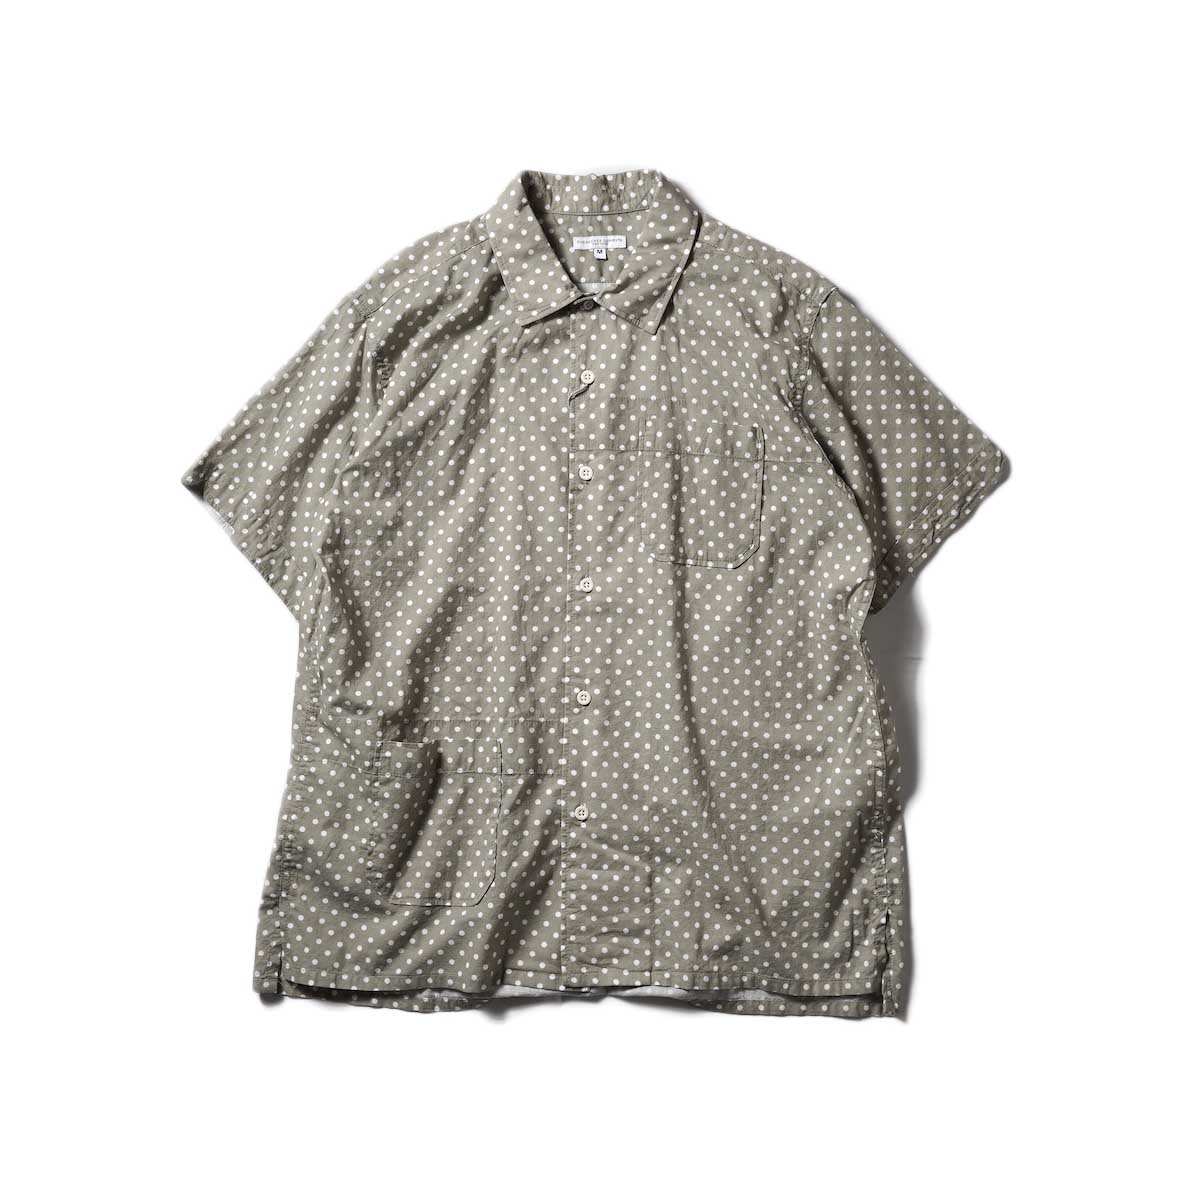 Engineered Garments / Camp Shirt - Polka Dot Cotton Lawn (Tan)正面